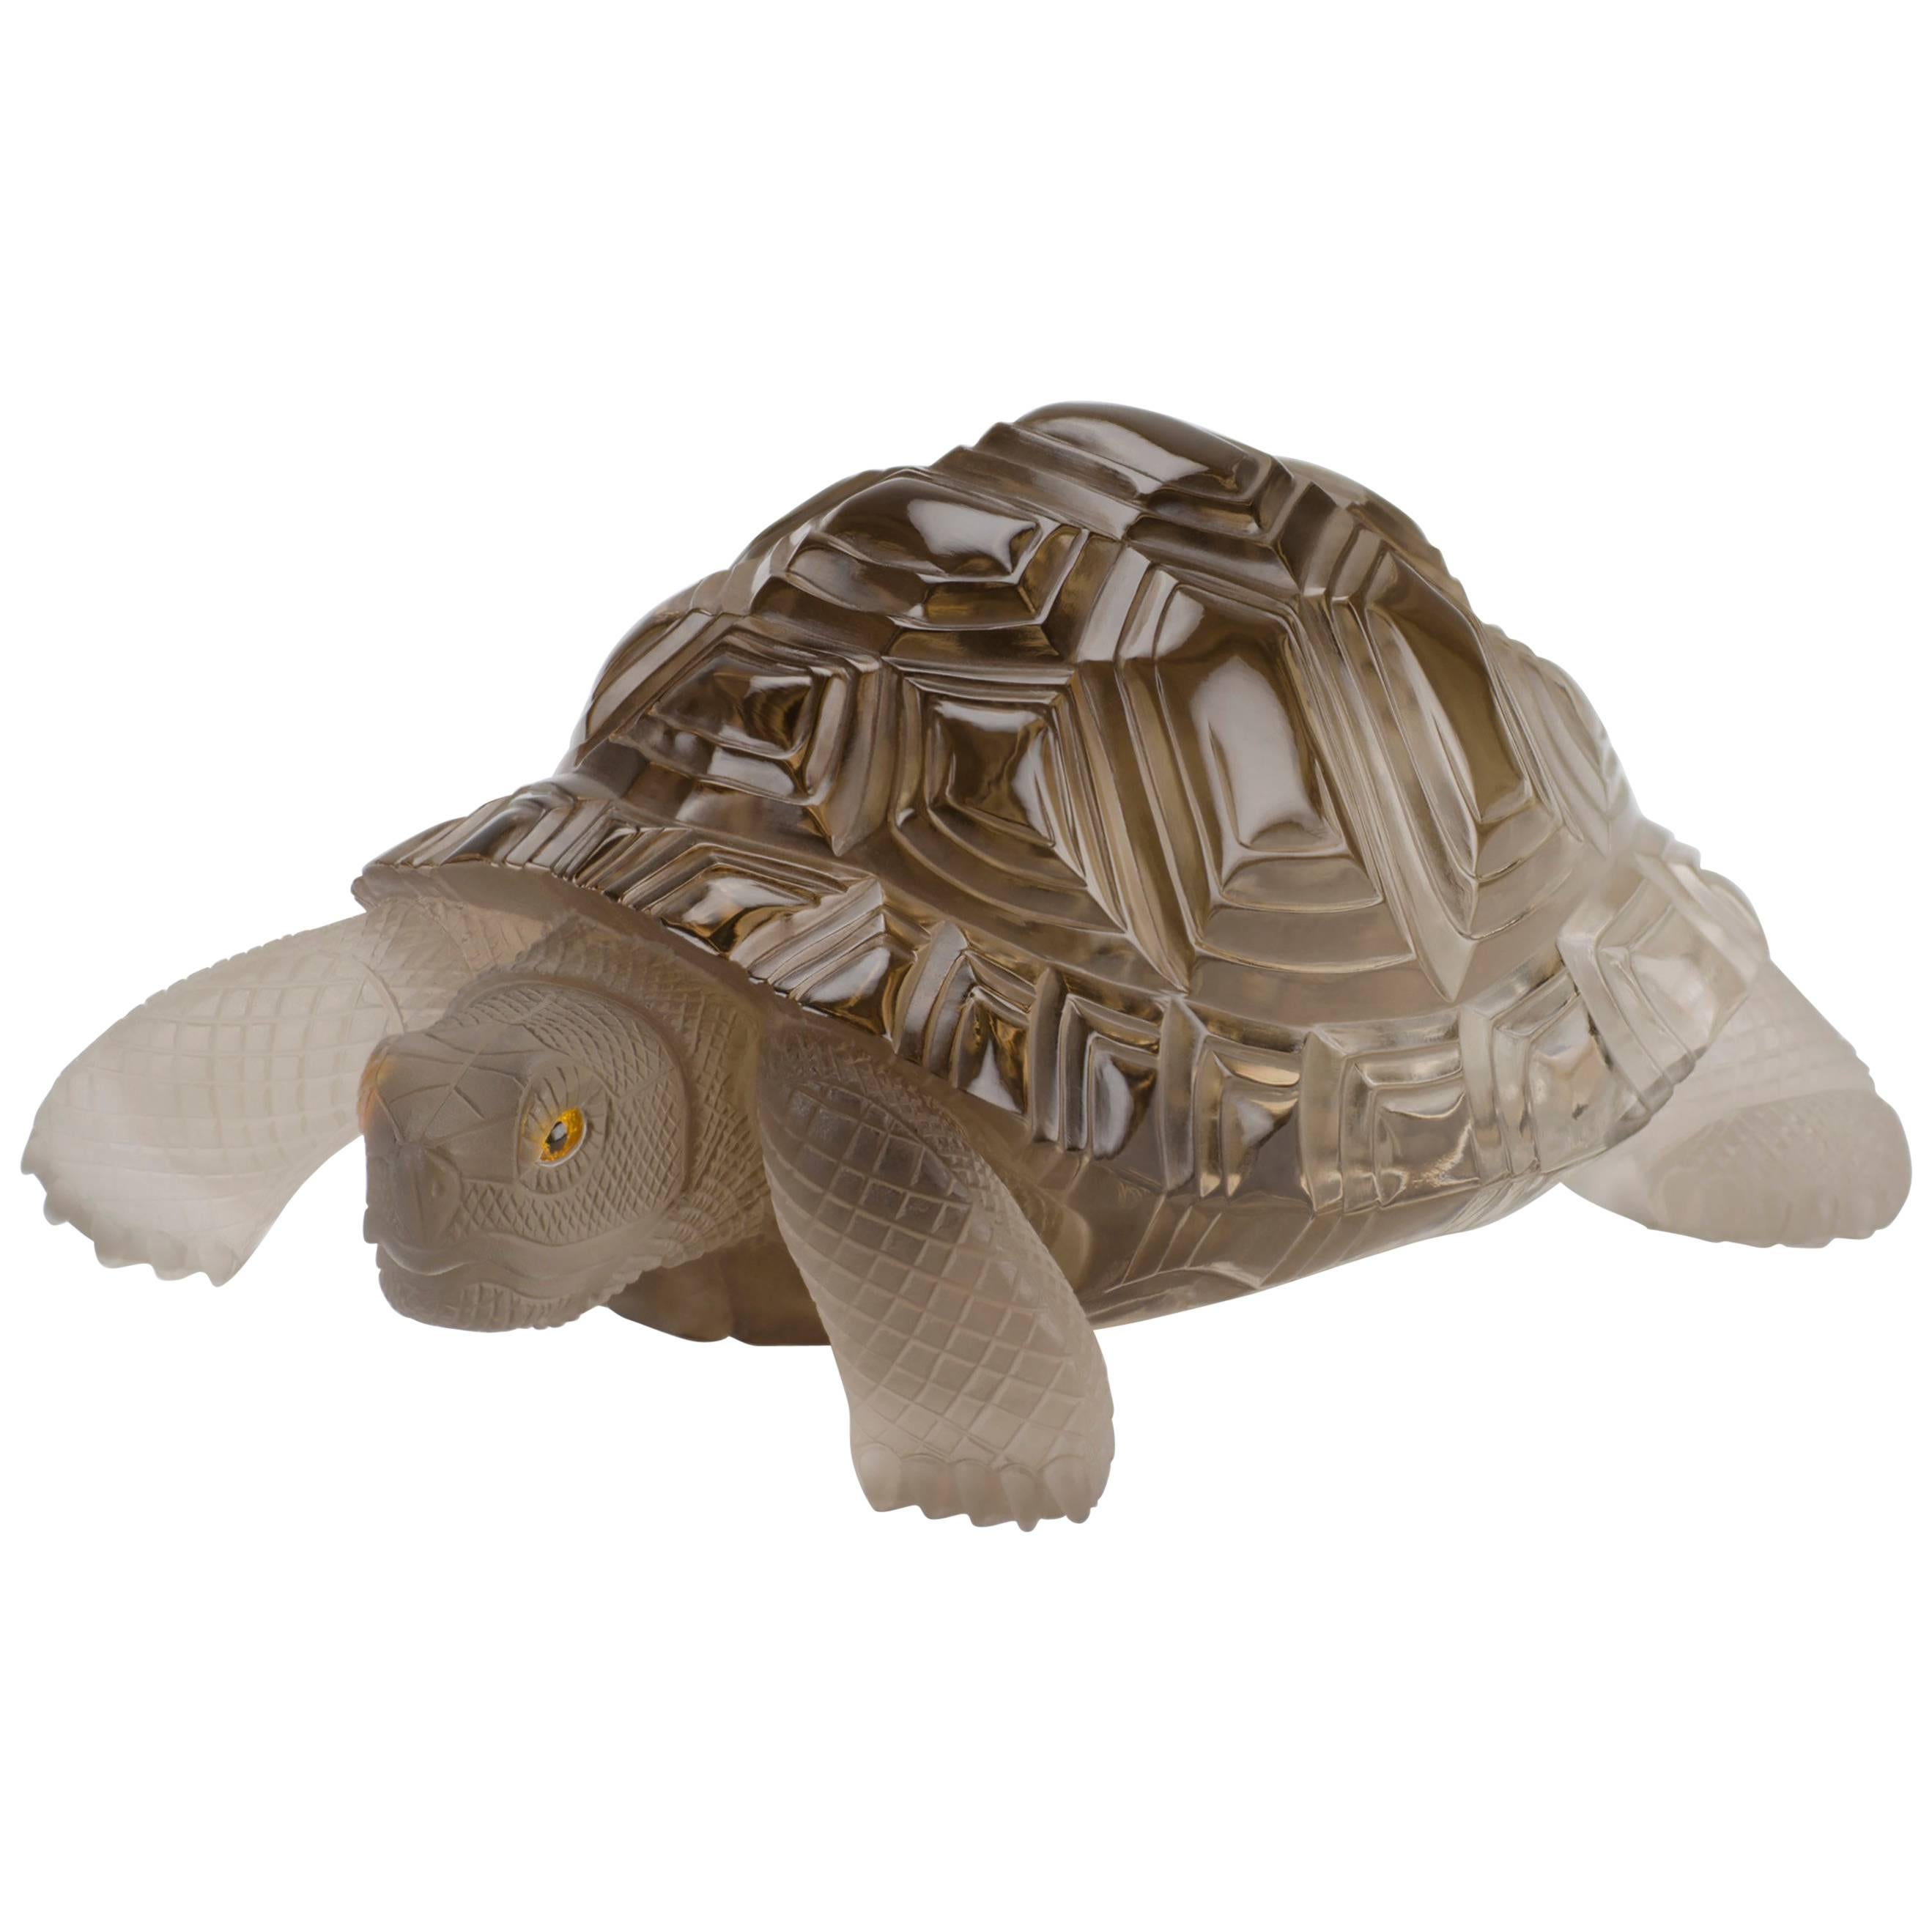 Detailed Smokey Quartz Turtle Sculpture For Sale